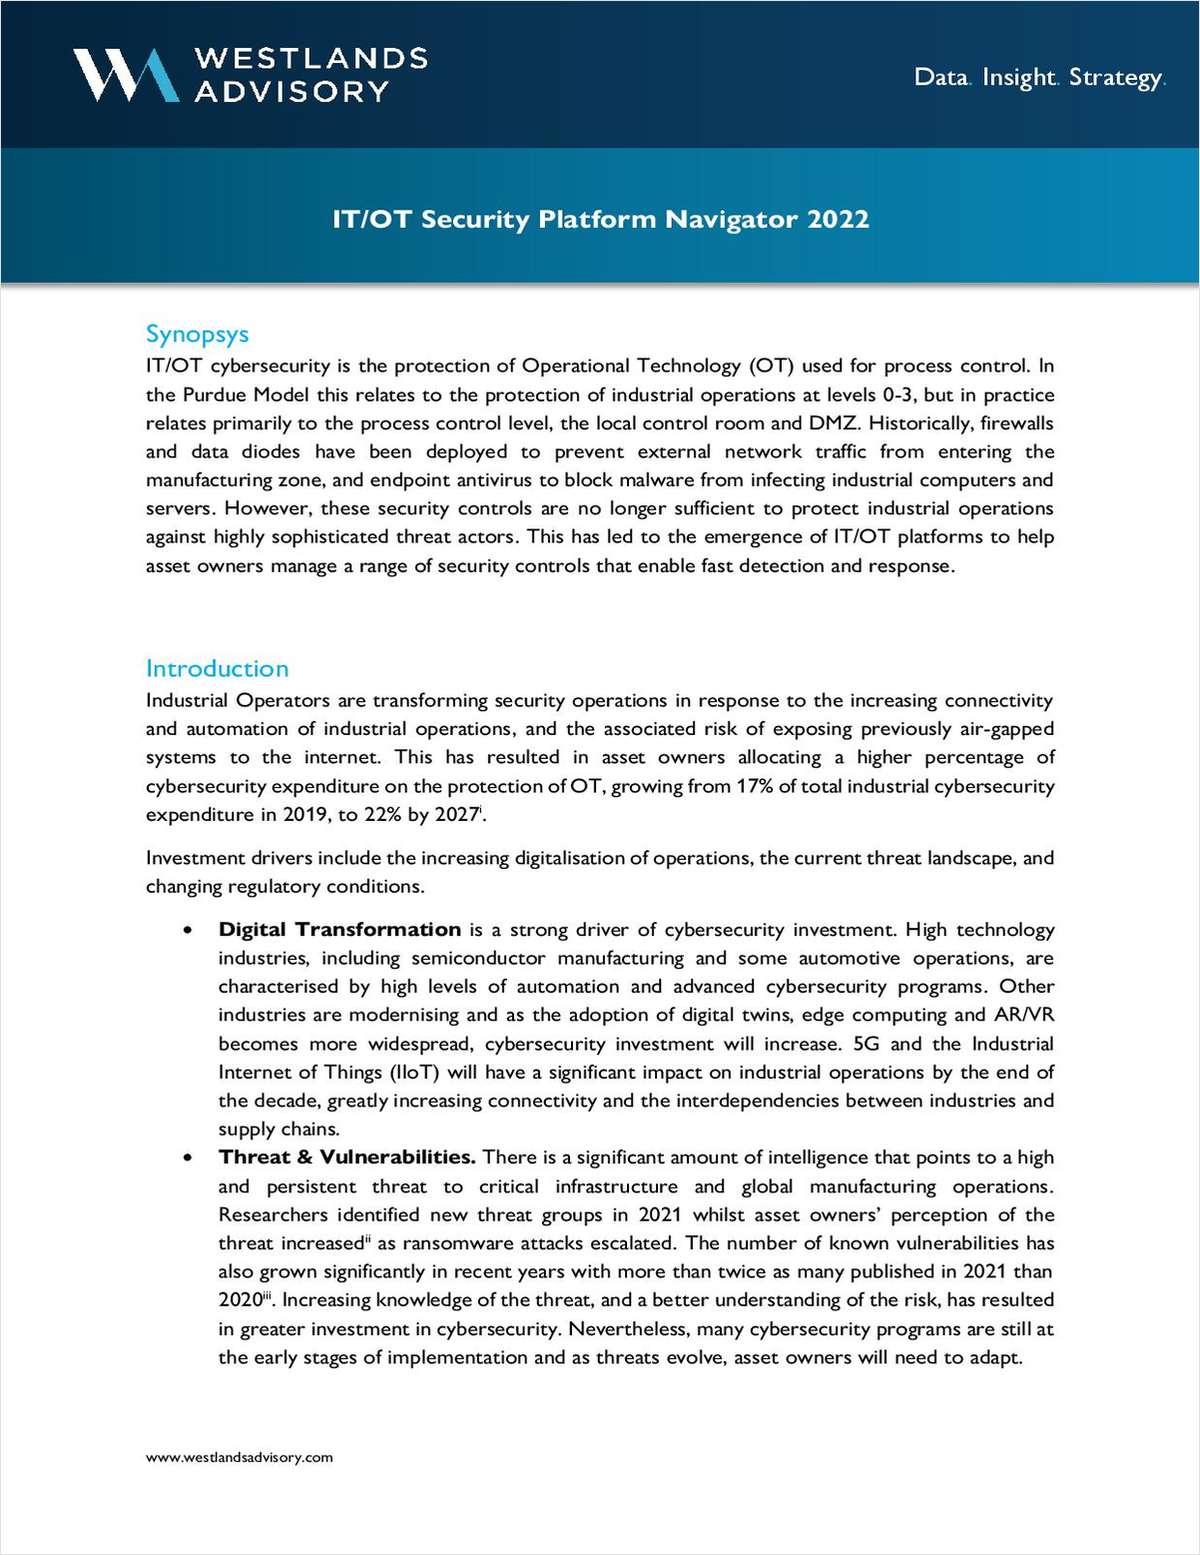 IT/OT Security Platform Navigator 2022